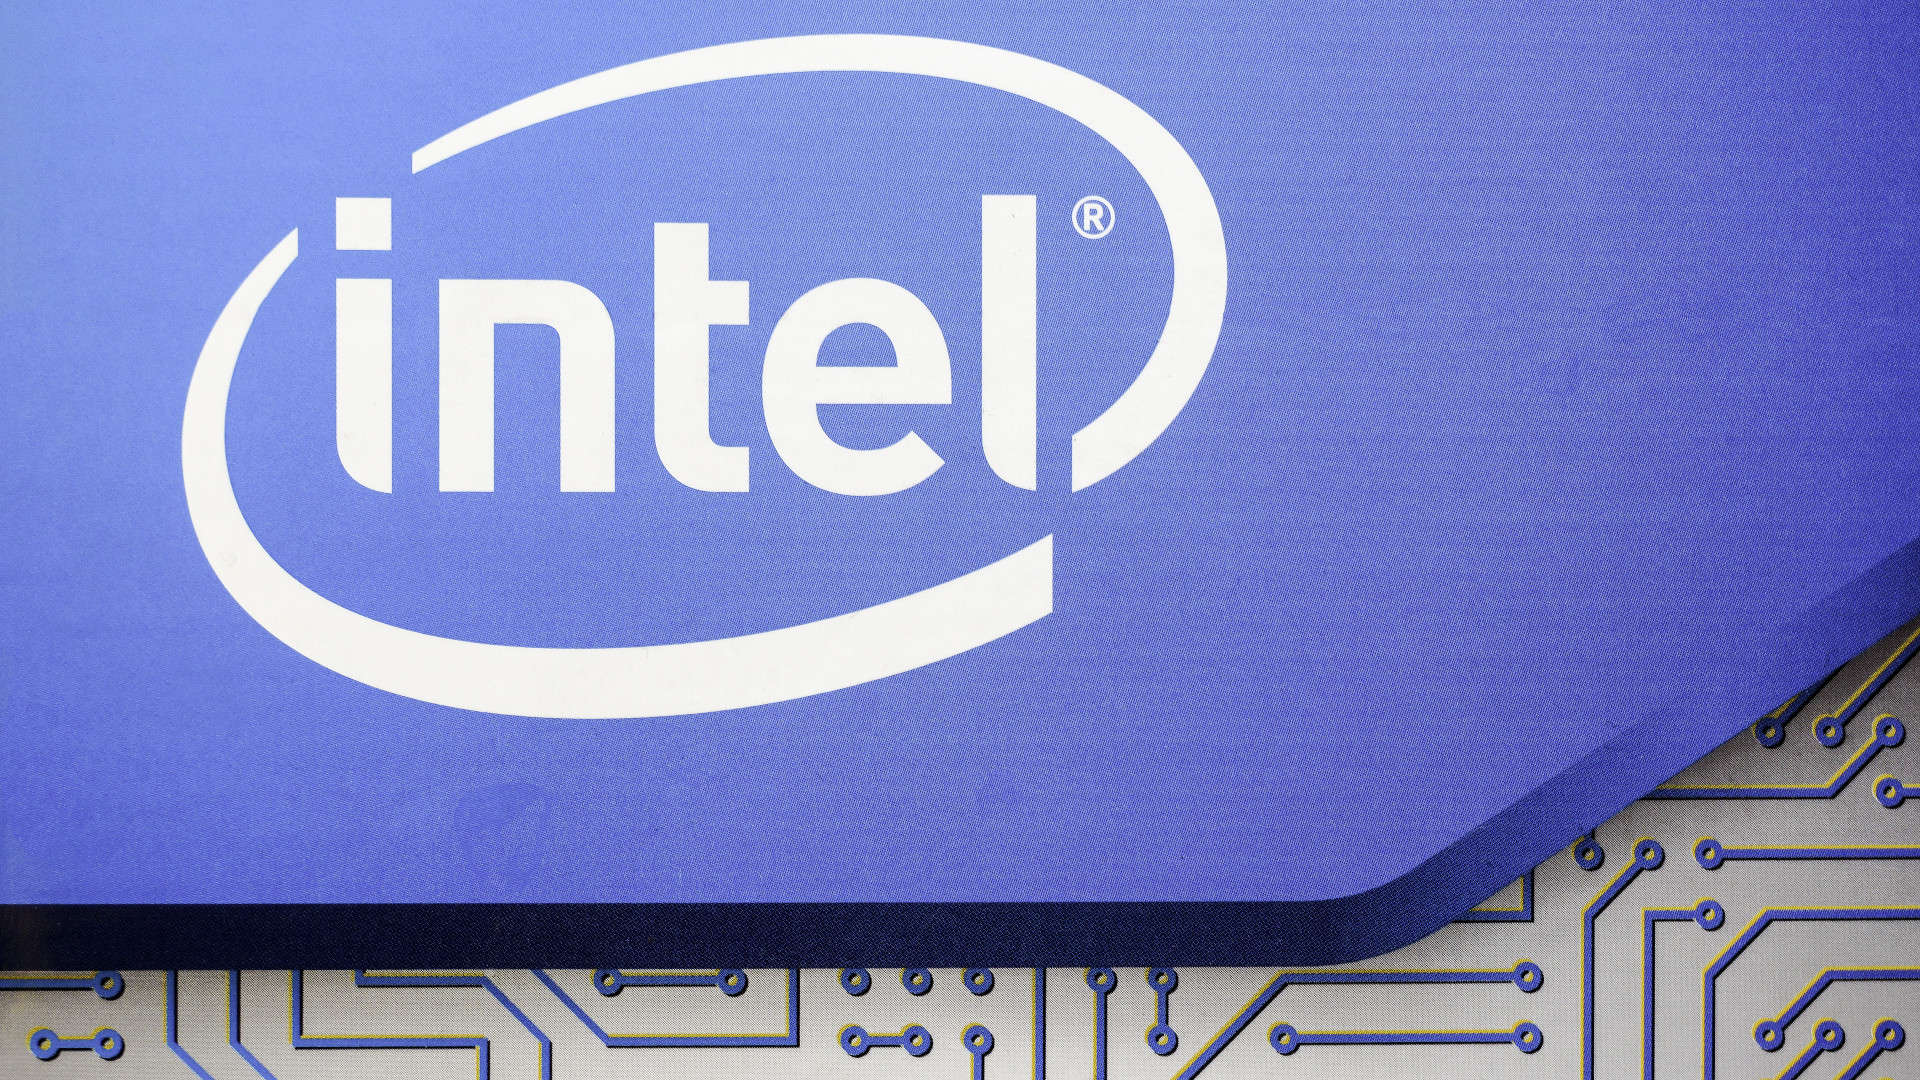 Кабинет интел. Интел. Фирма Intel. Корпорация Intel. Компания Intel логотип.